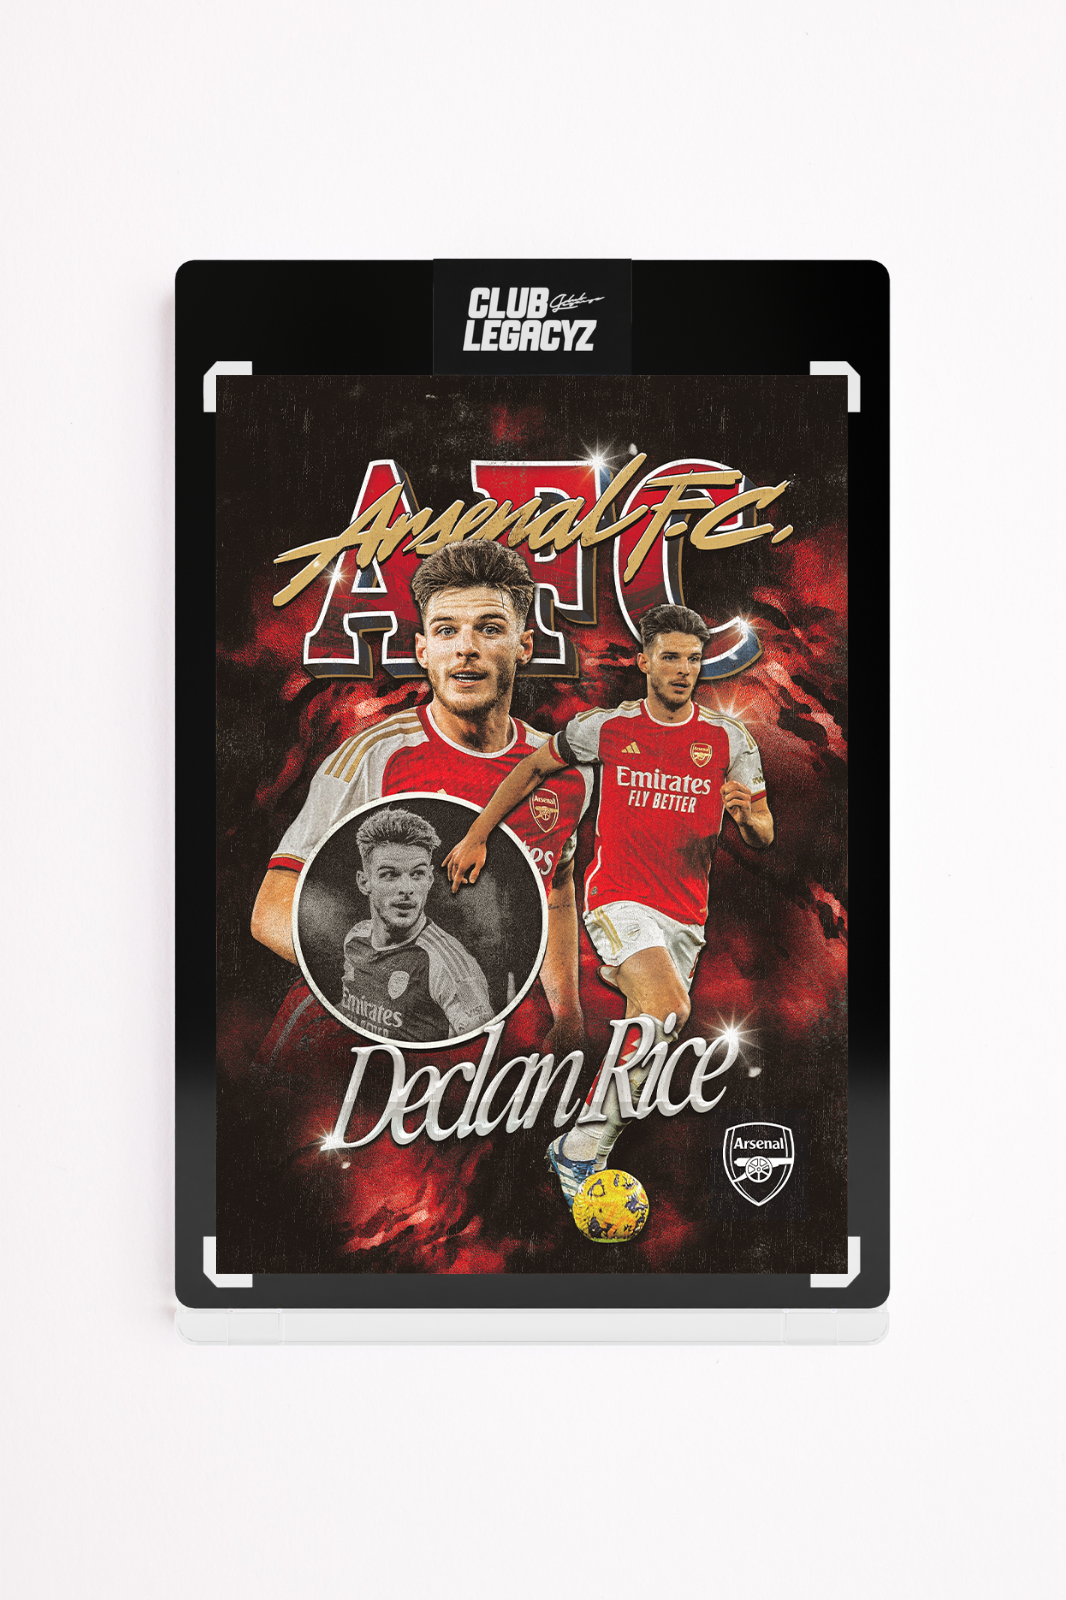 Arsenal FC - Icon Bootleg Declan Rice 100 exemplaires